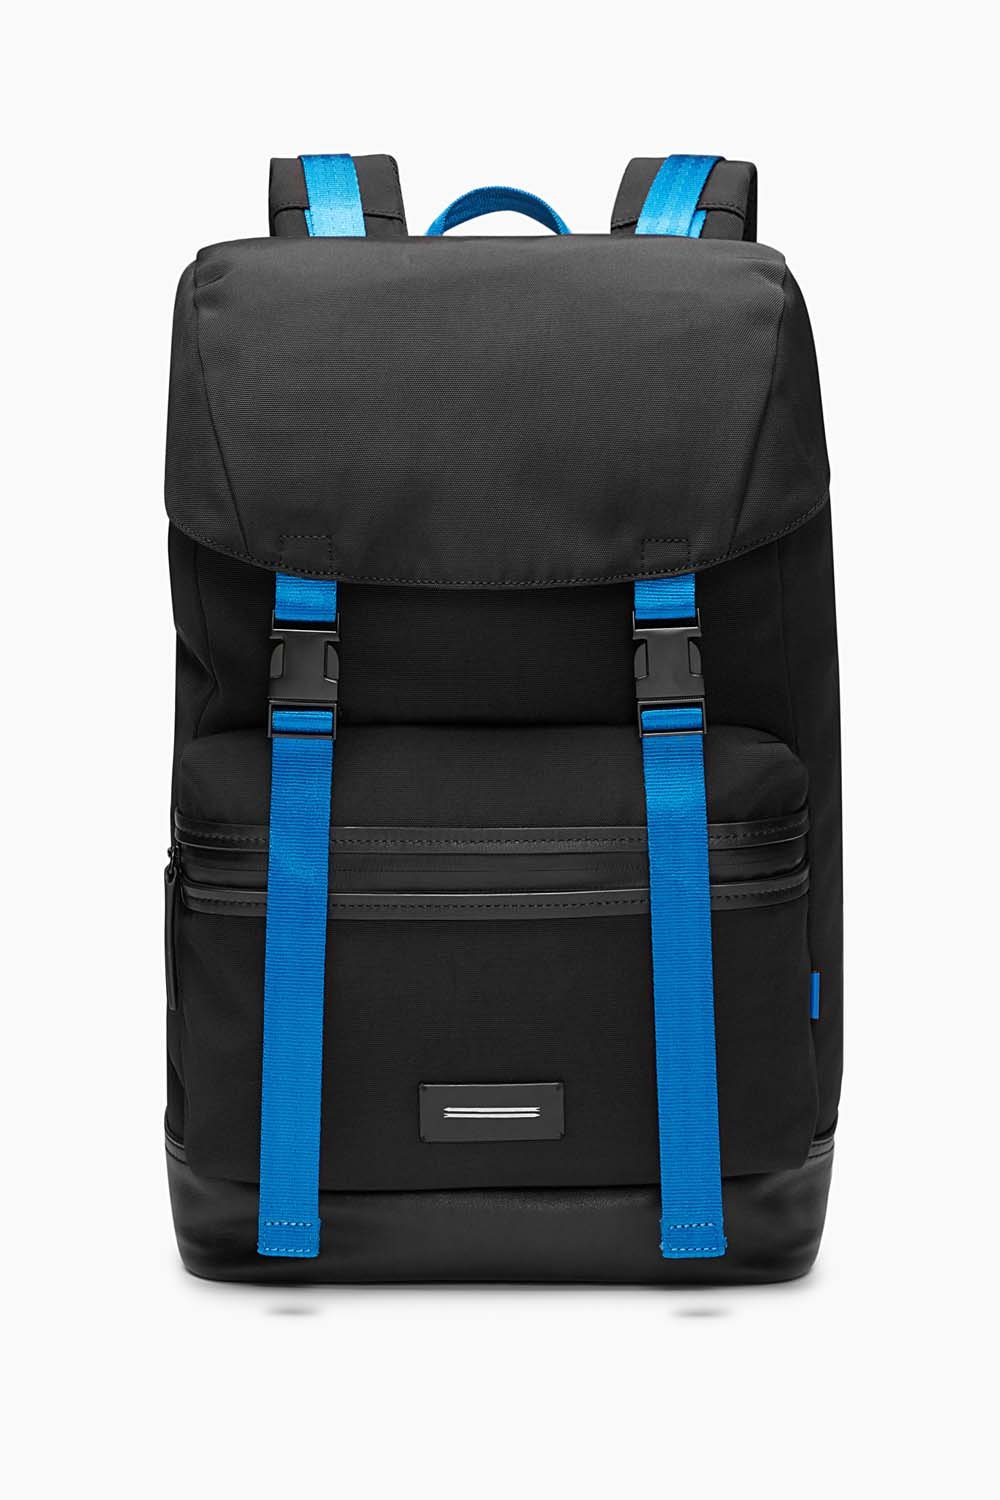 Collosseum Backpack